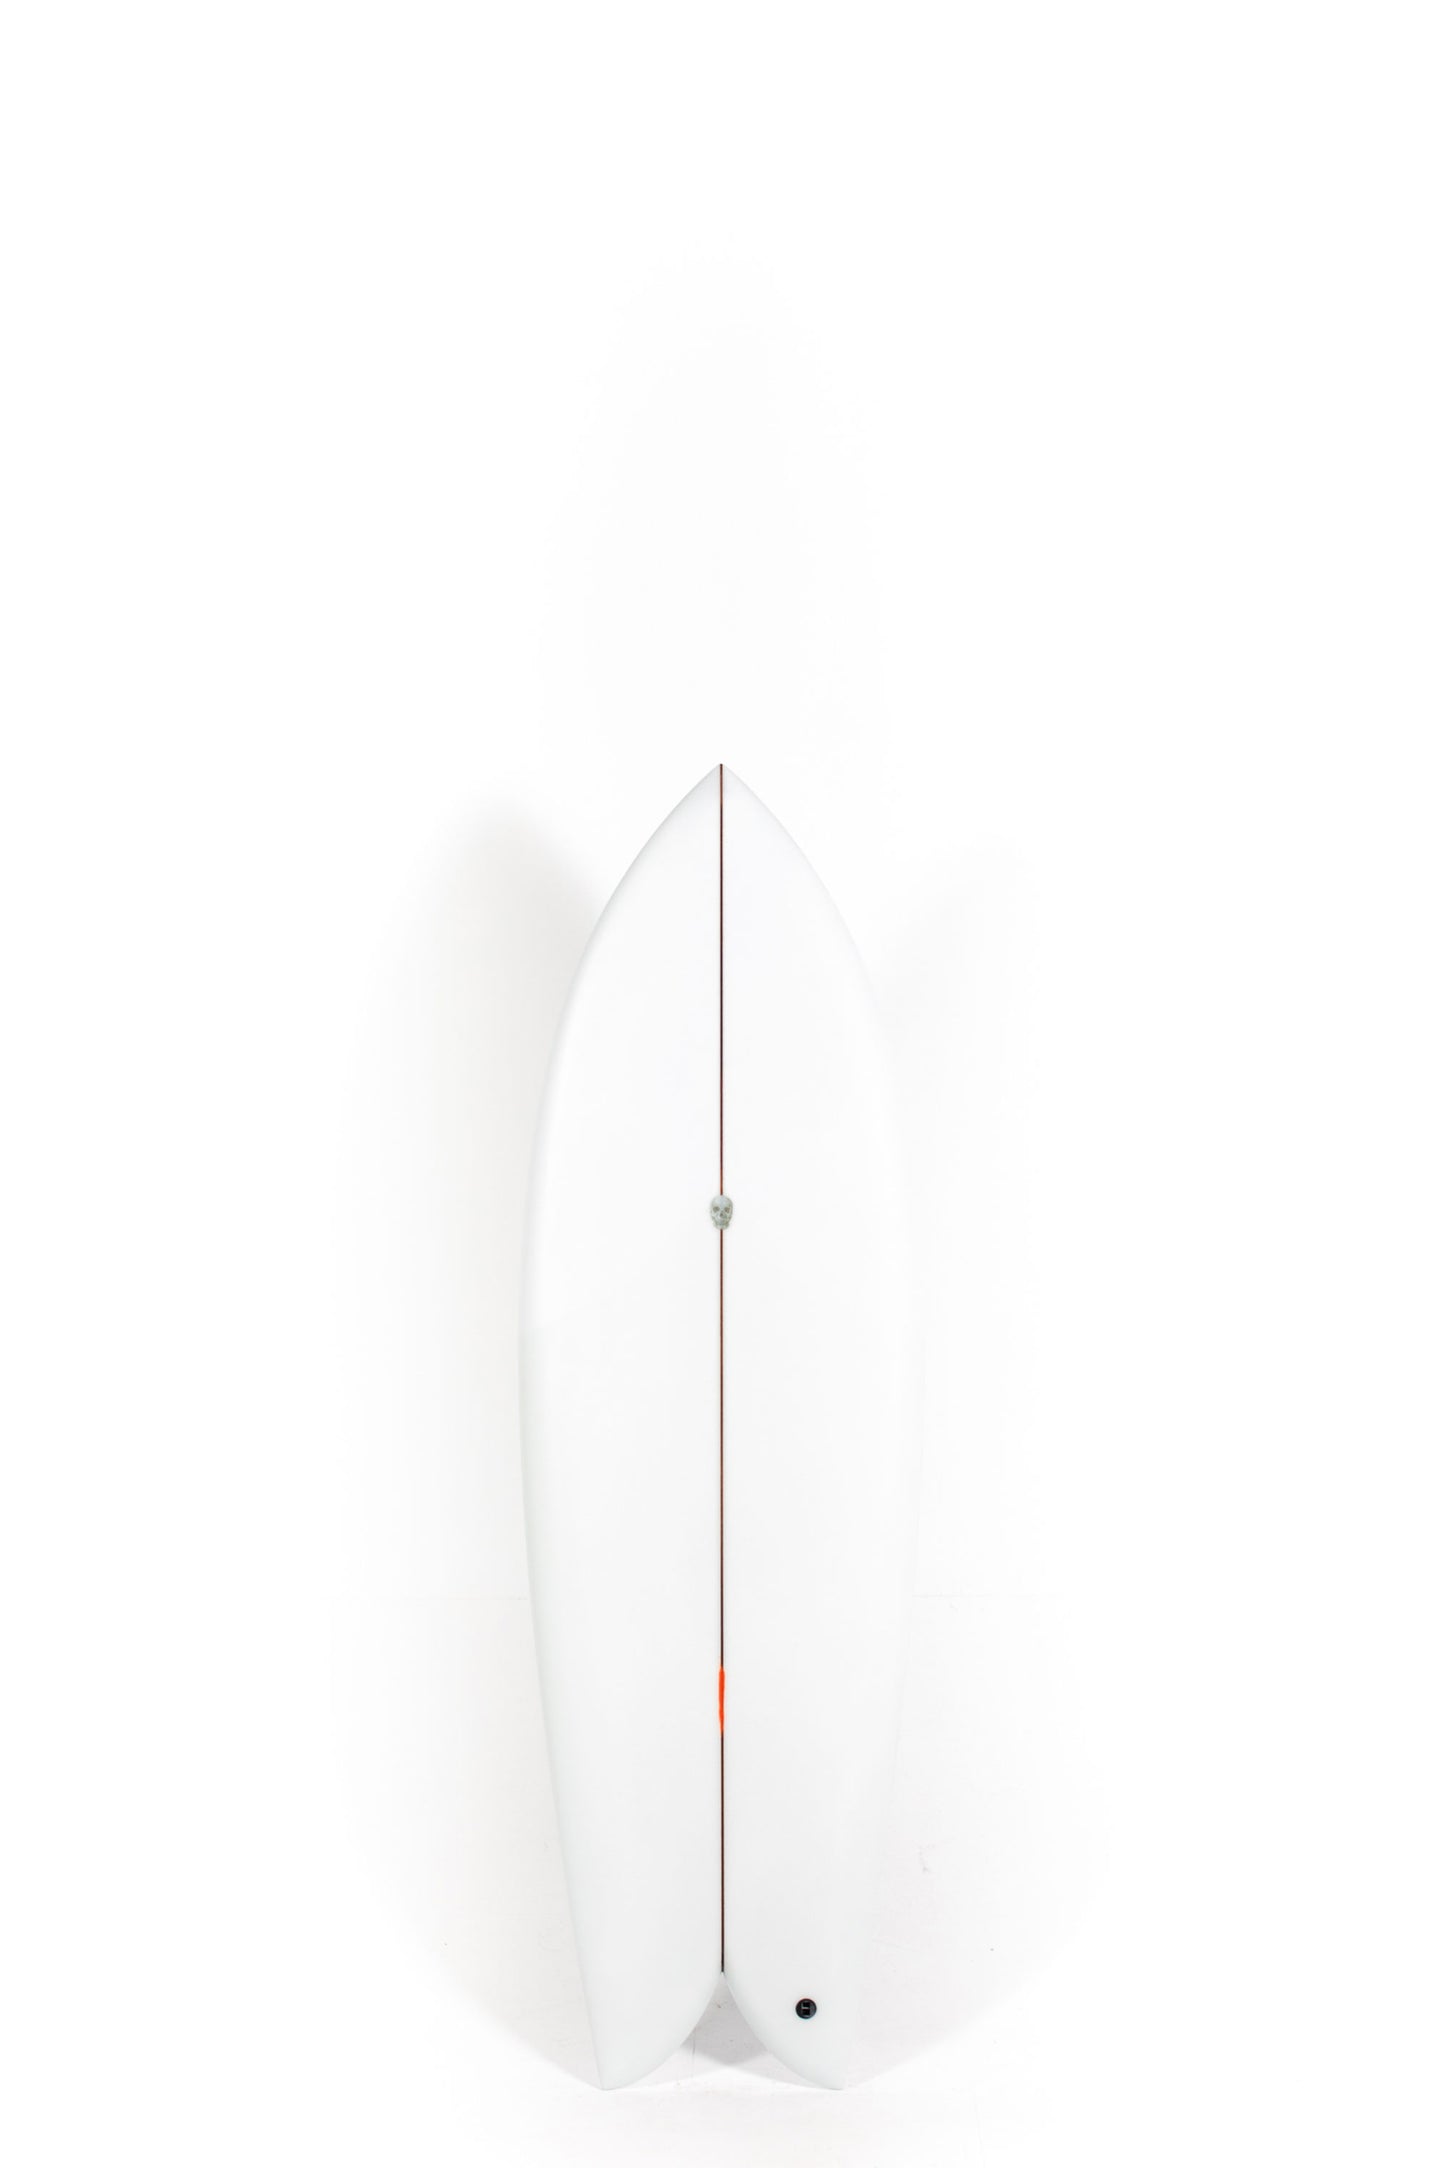 Pukas-Surf-Shop-Christenson-Surfboards-Chris-Fish-Chris-Christenson-5_8